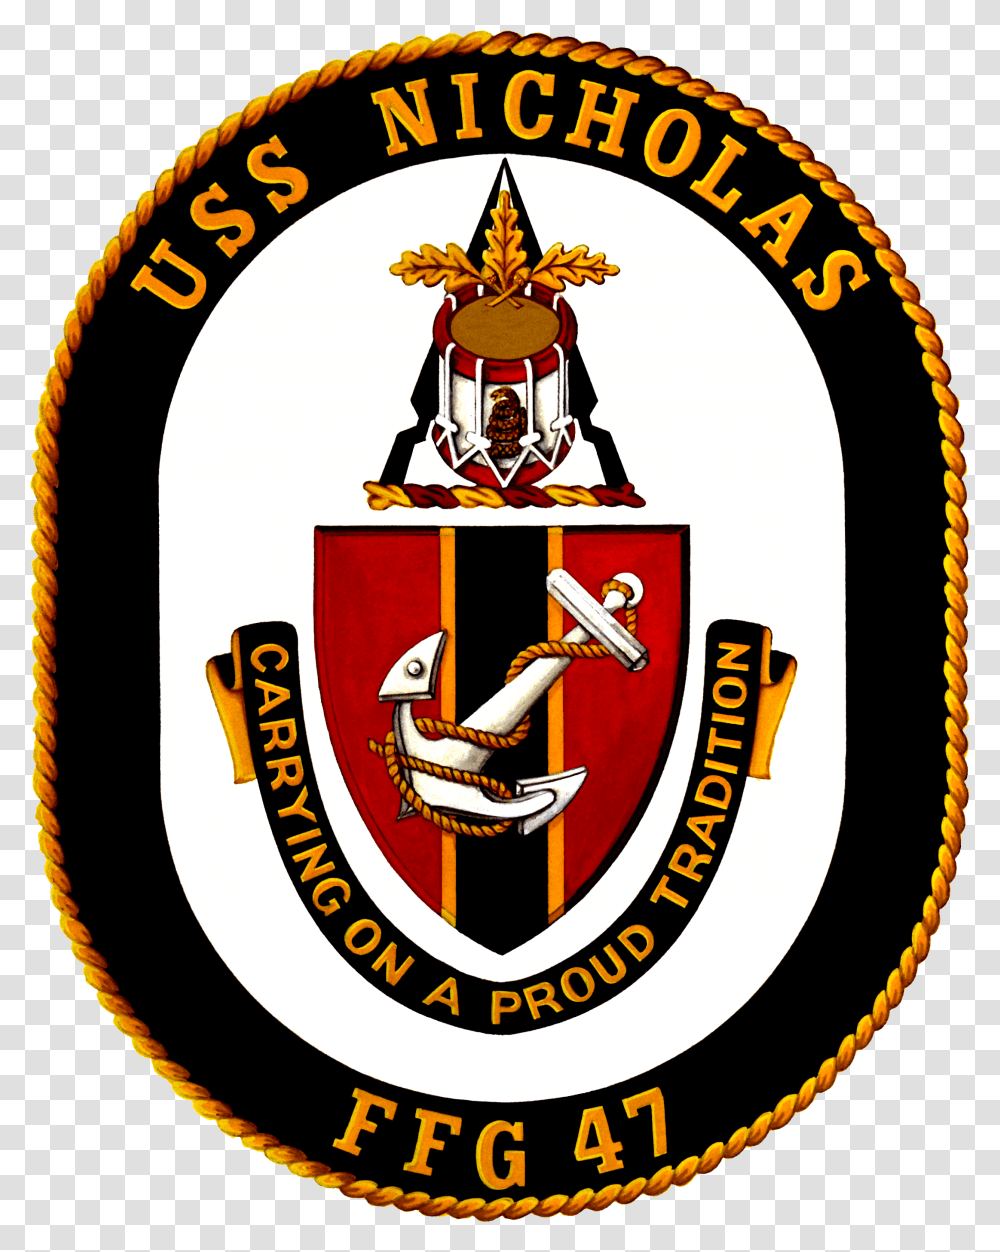 Uss Nicholas Ffg 47 Crest Uss New York Crest, Logo, Trademark, Emblem Transparent Png